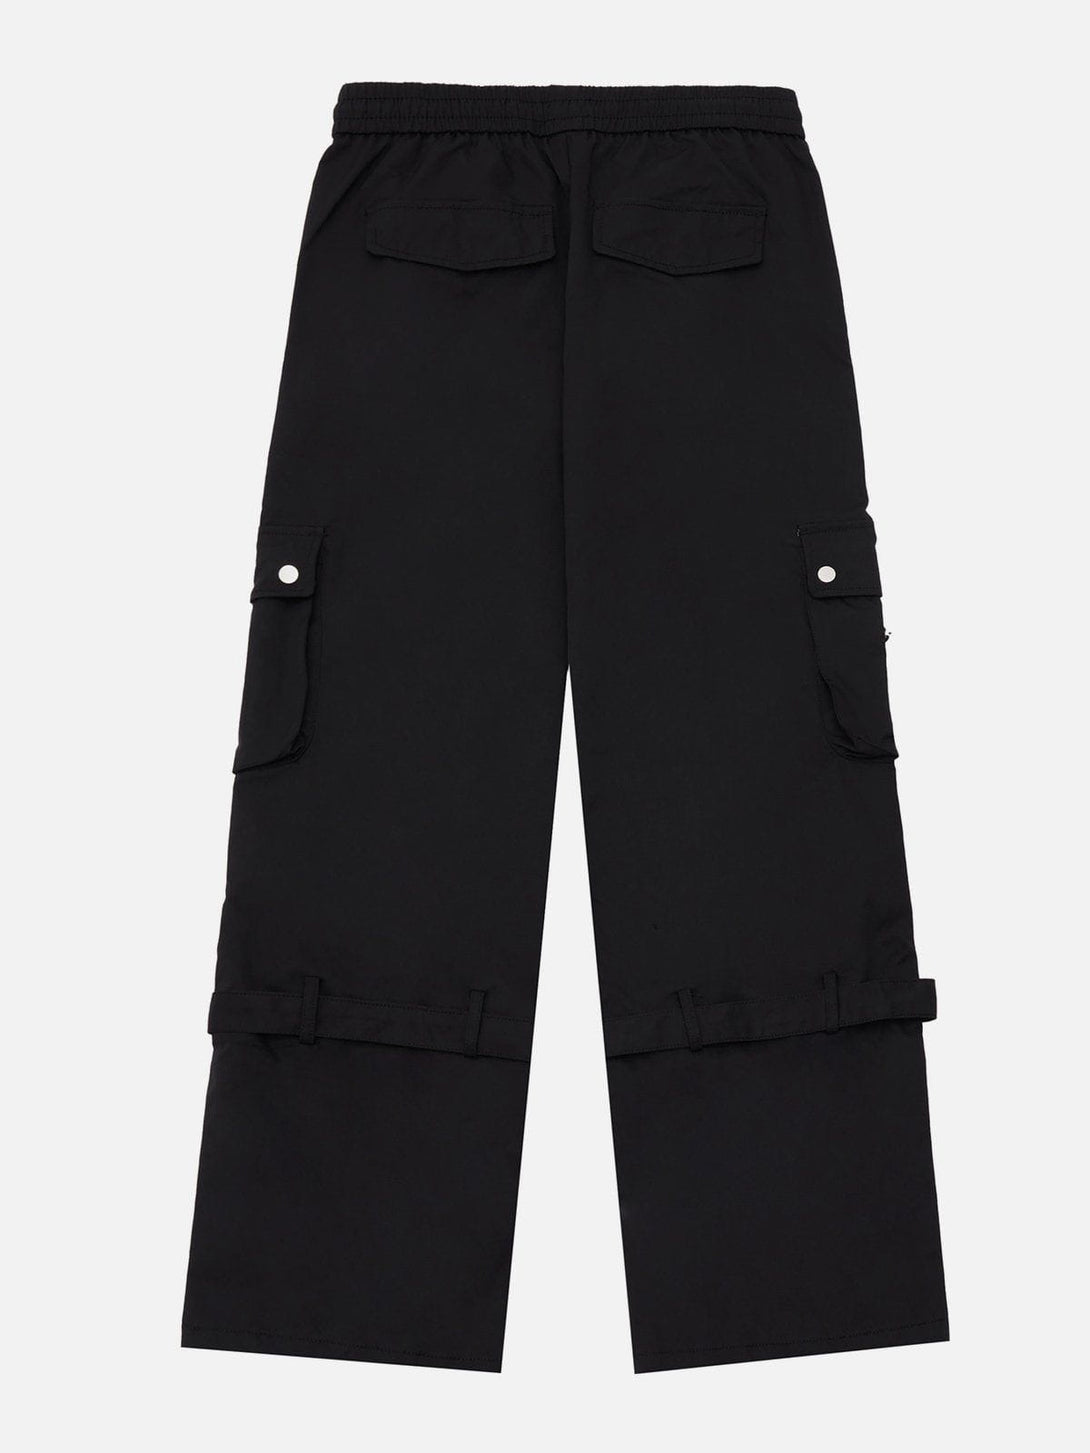 Levefly - Puttee Multi-pocket Cargo Pants - Streetwear Fashion - levefly.com